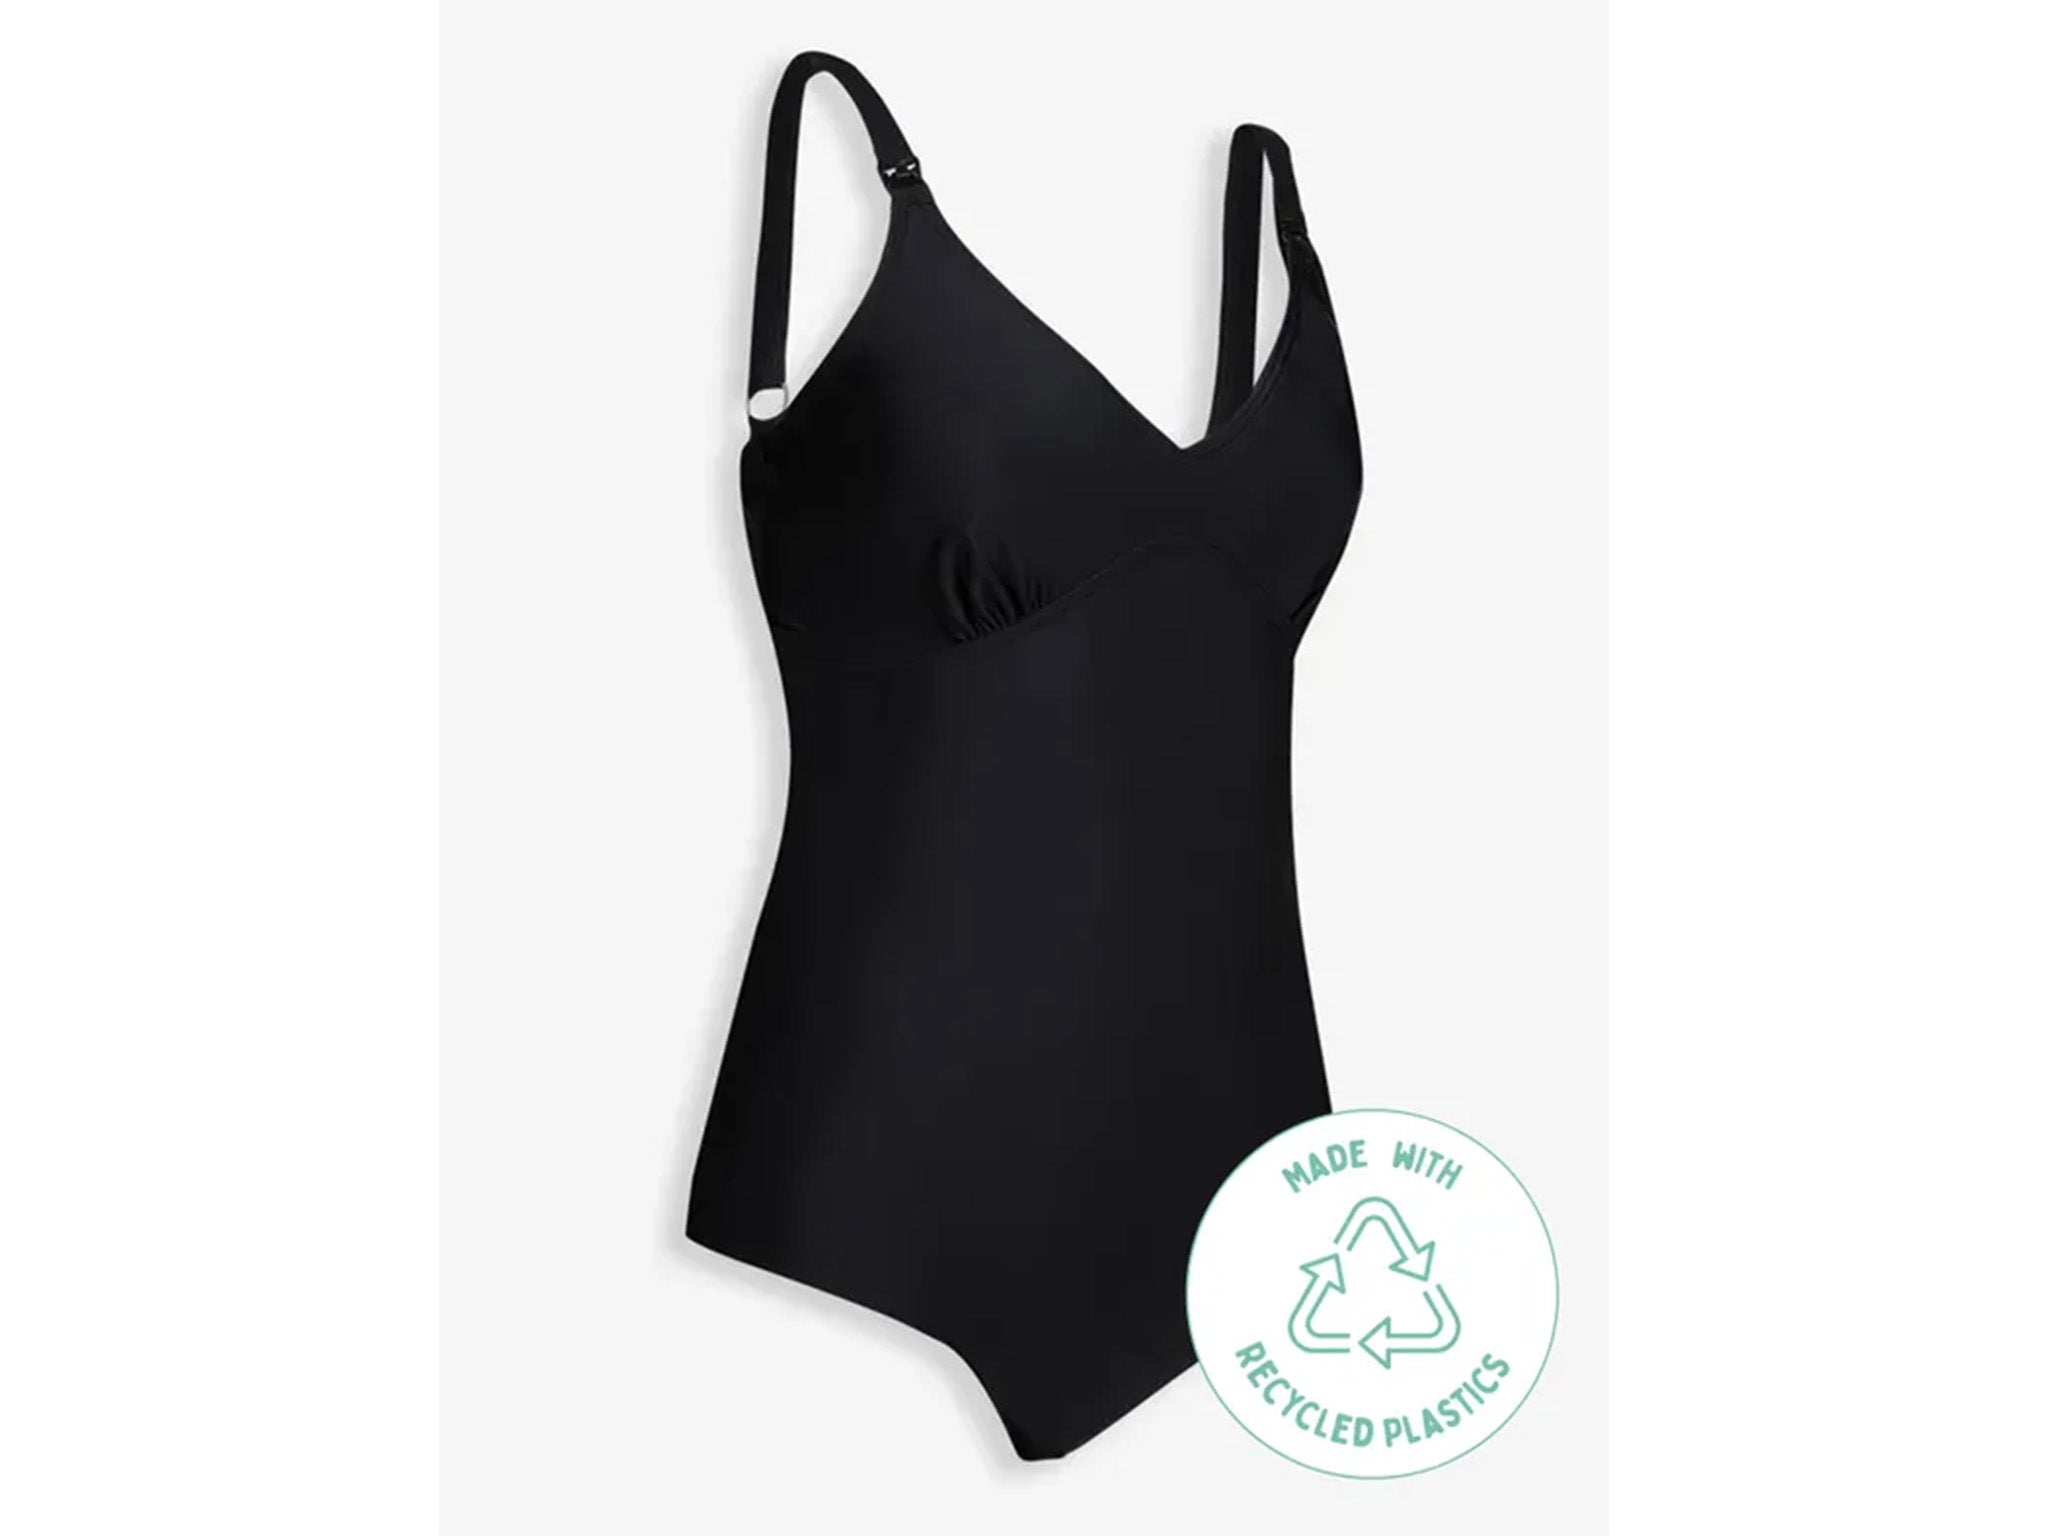 ASOS DESIGN mix and match one shoulder flexi underwire bikini top in black